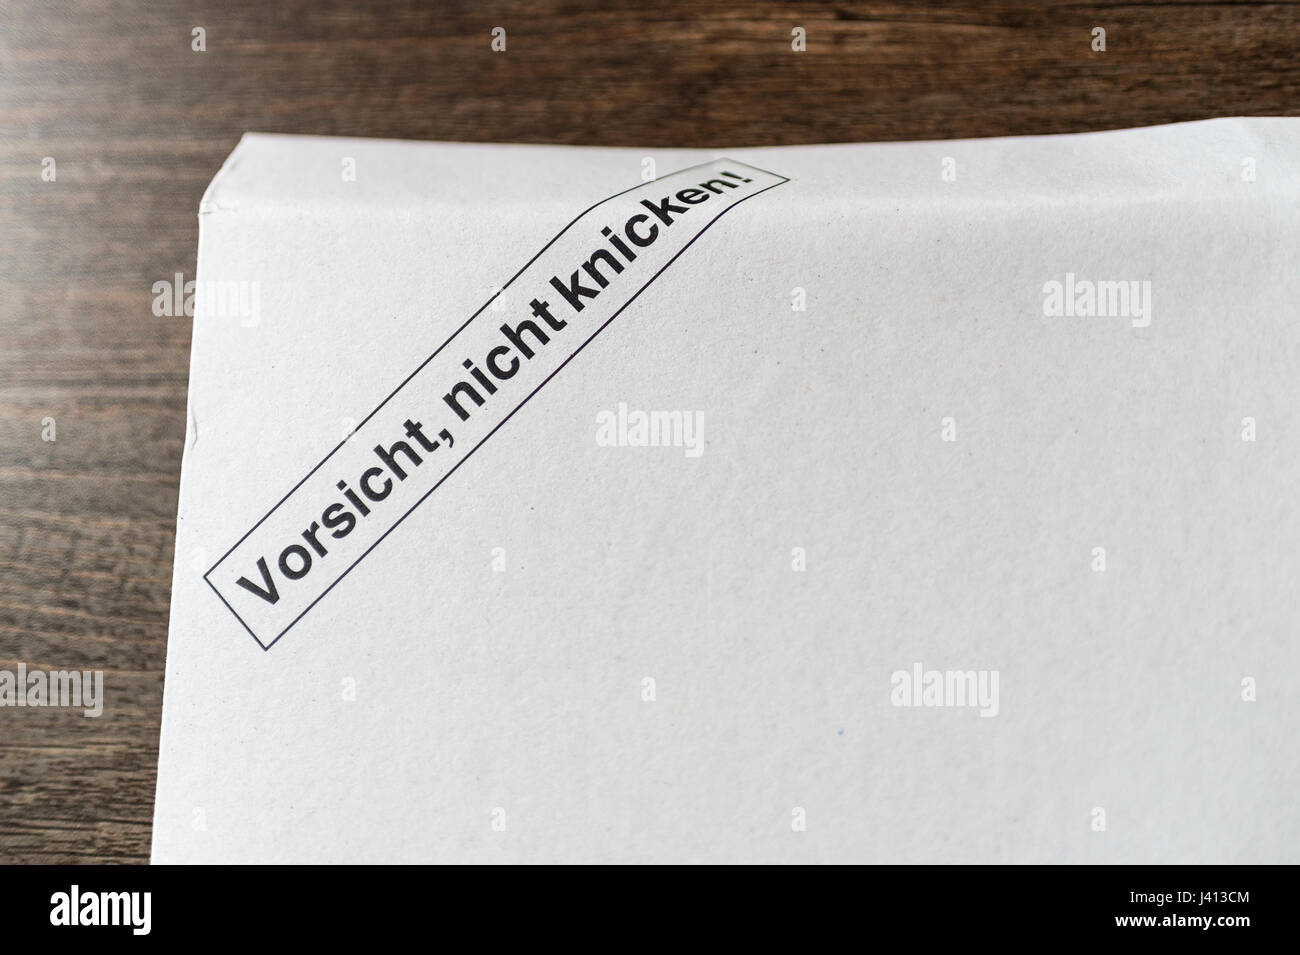 Enveloppe absurdement morose avec texte allemand, traduction : Attention,  ne pas froisser Photo Stock - Alamy